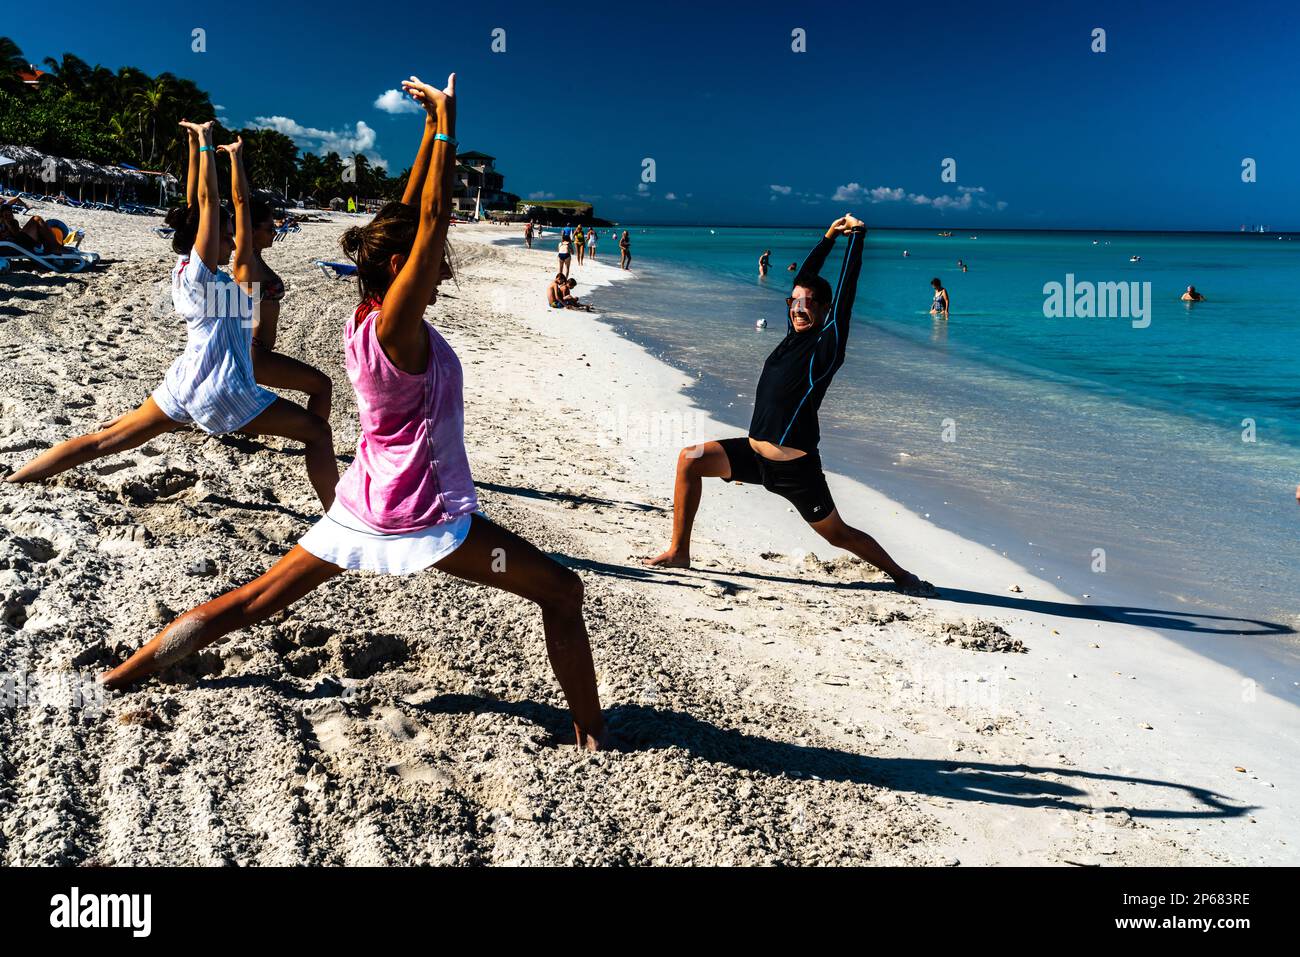 Begeisterter Stretching-Kurs, um fit zu bleiben am Strand, Varadero, Kuba, Westindischen Inseln, Karibik, Mittelamerika Stockfoto